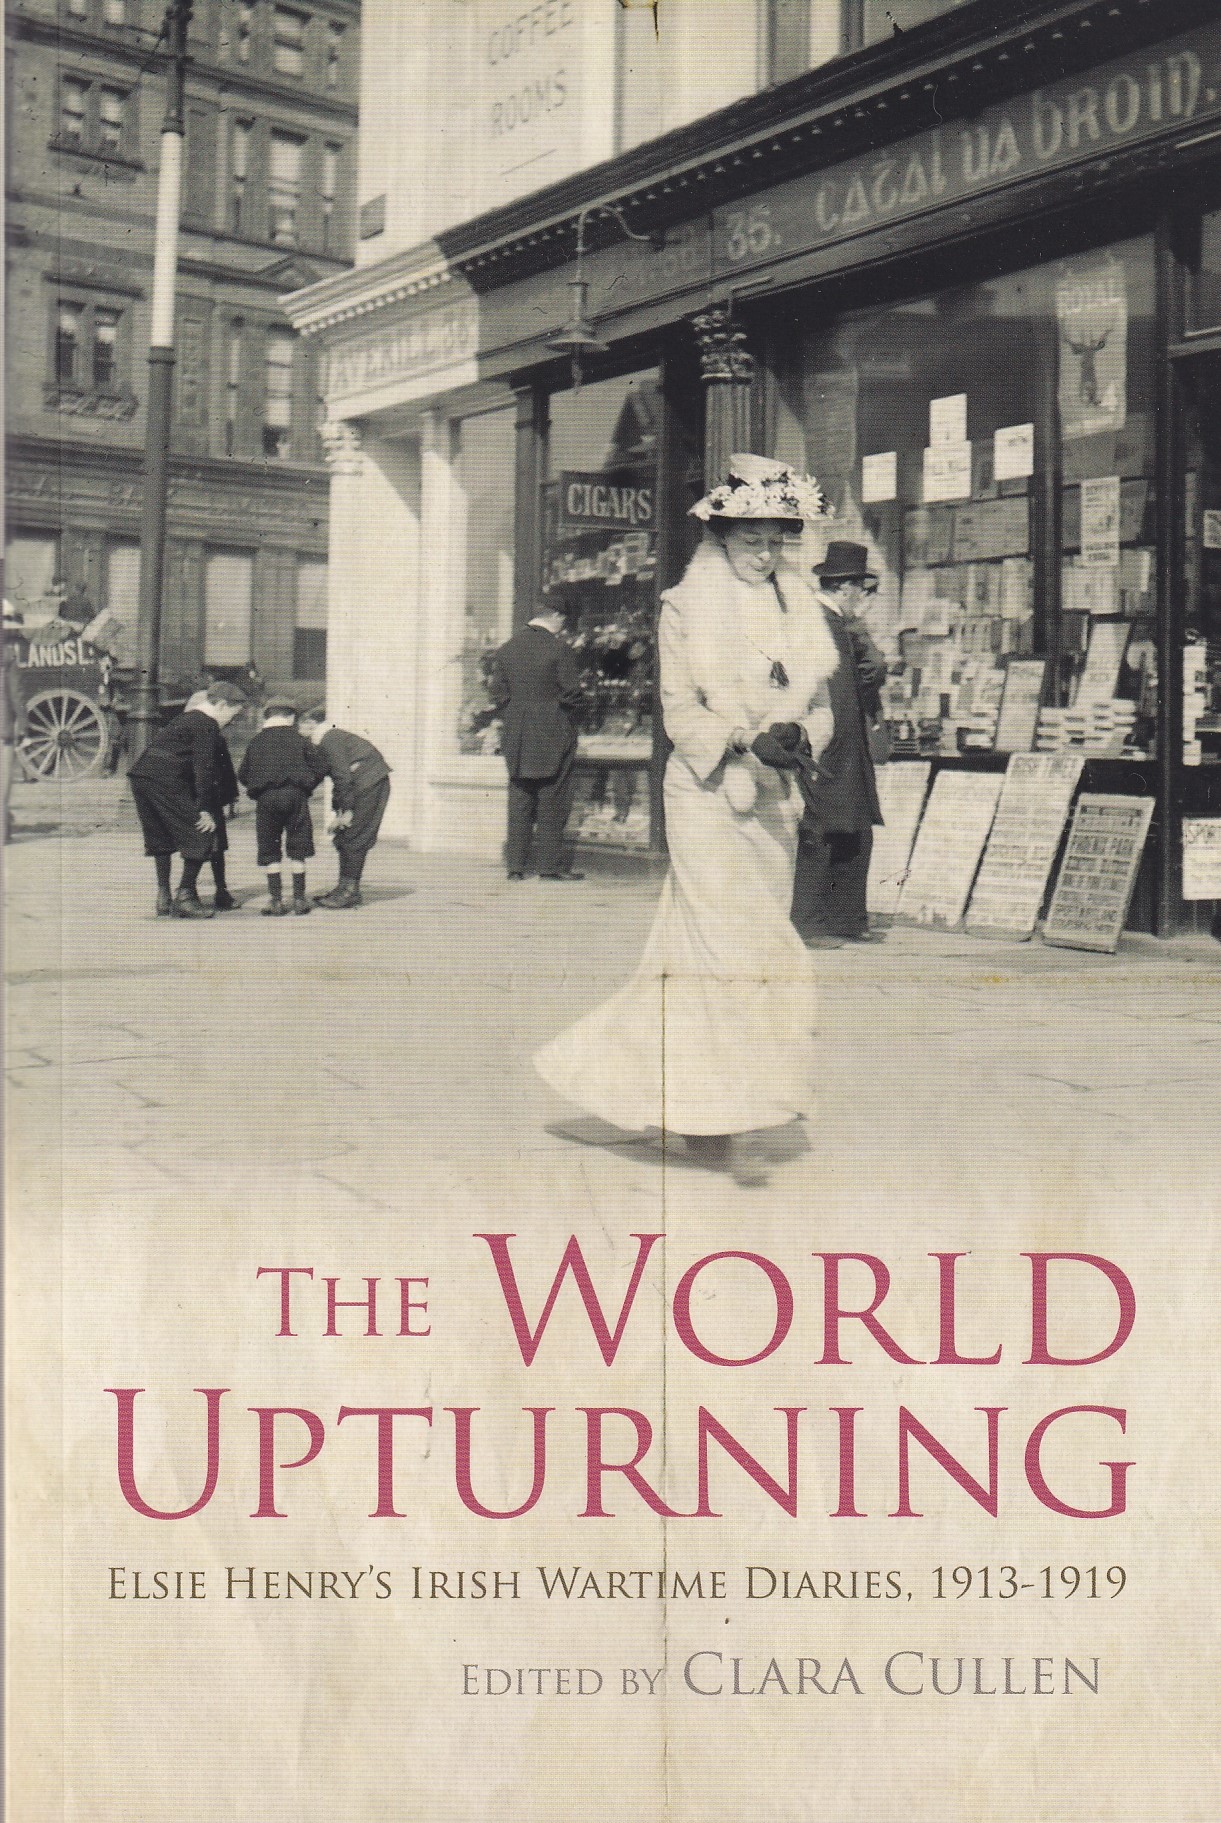 The World Upturning: Elsie Henry’s Irish Wartime Diaries, 1913 -1919 by Clara Cullen